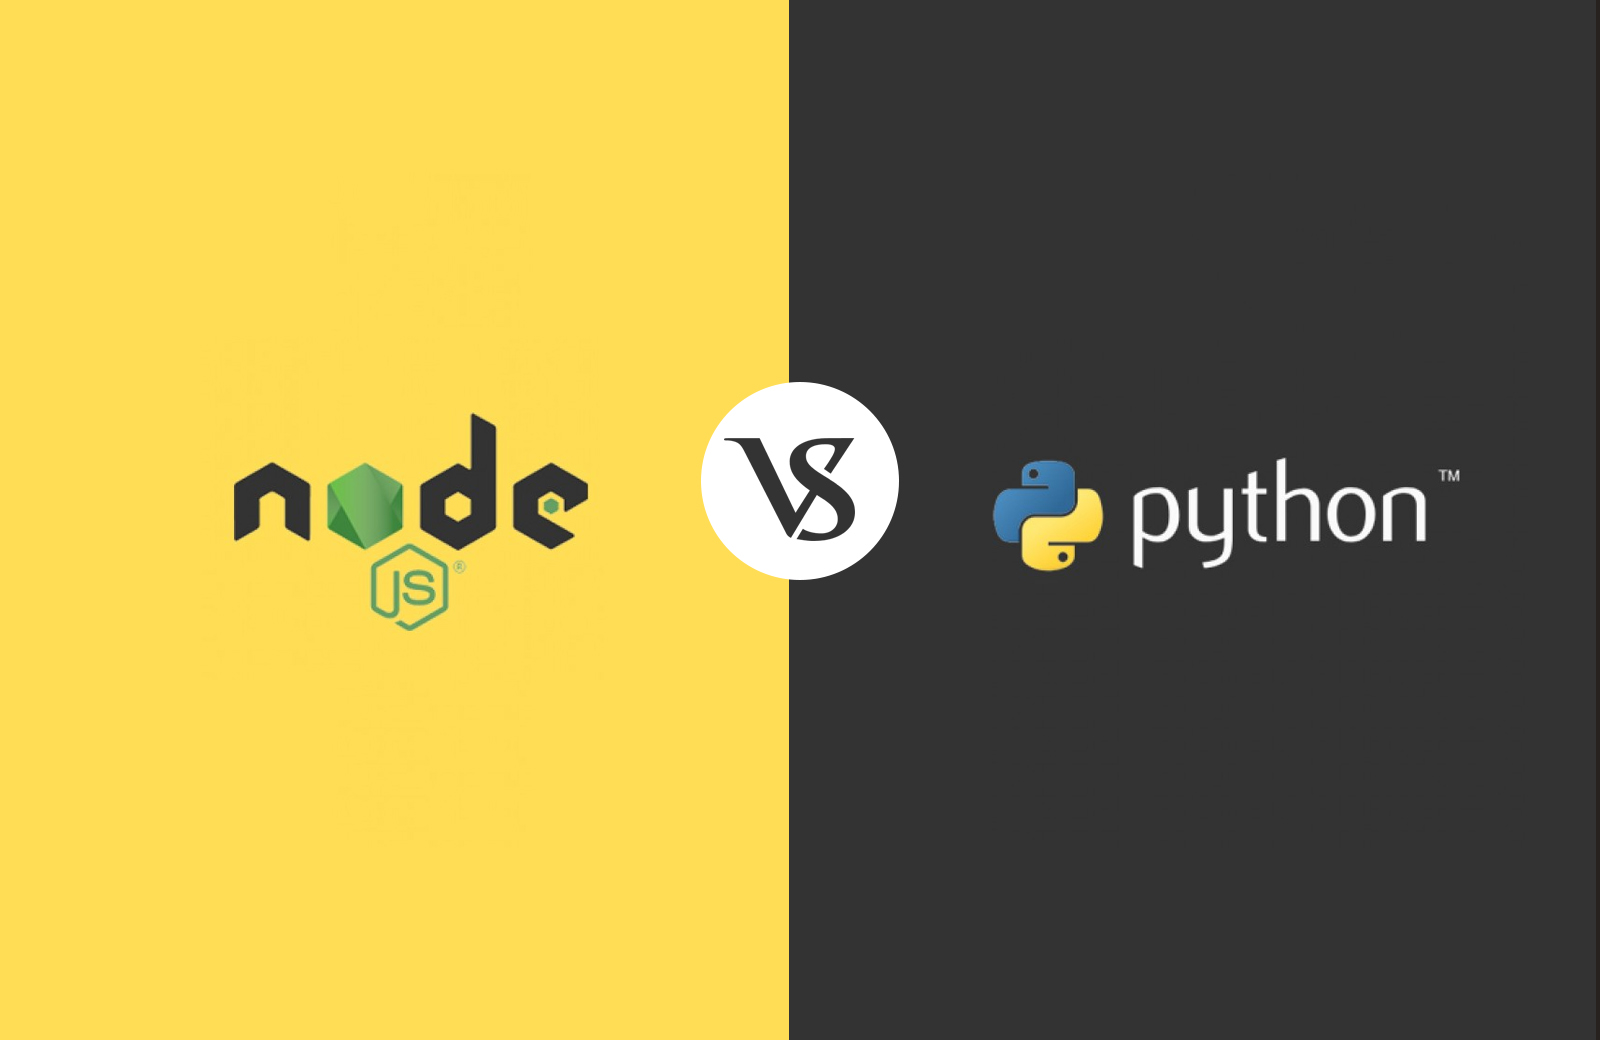 Node.js vs python